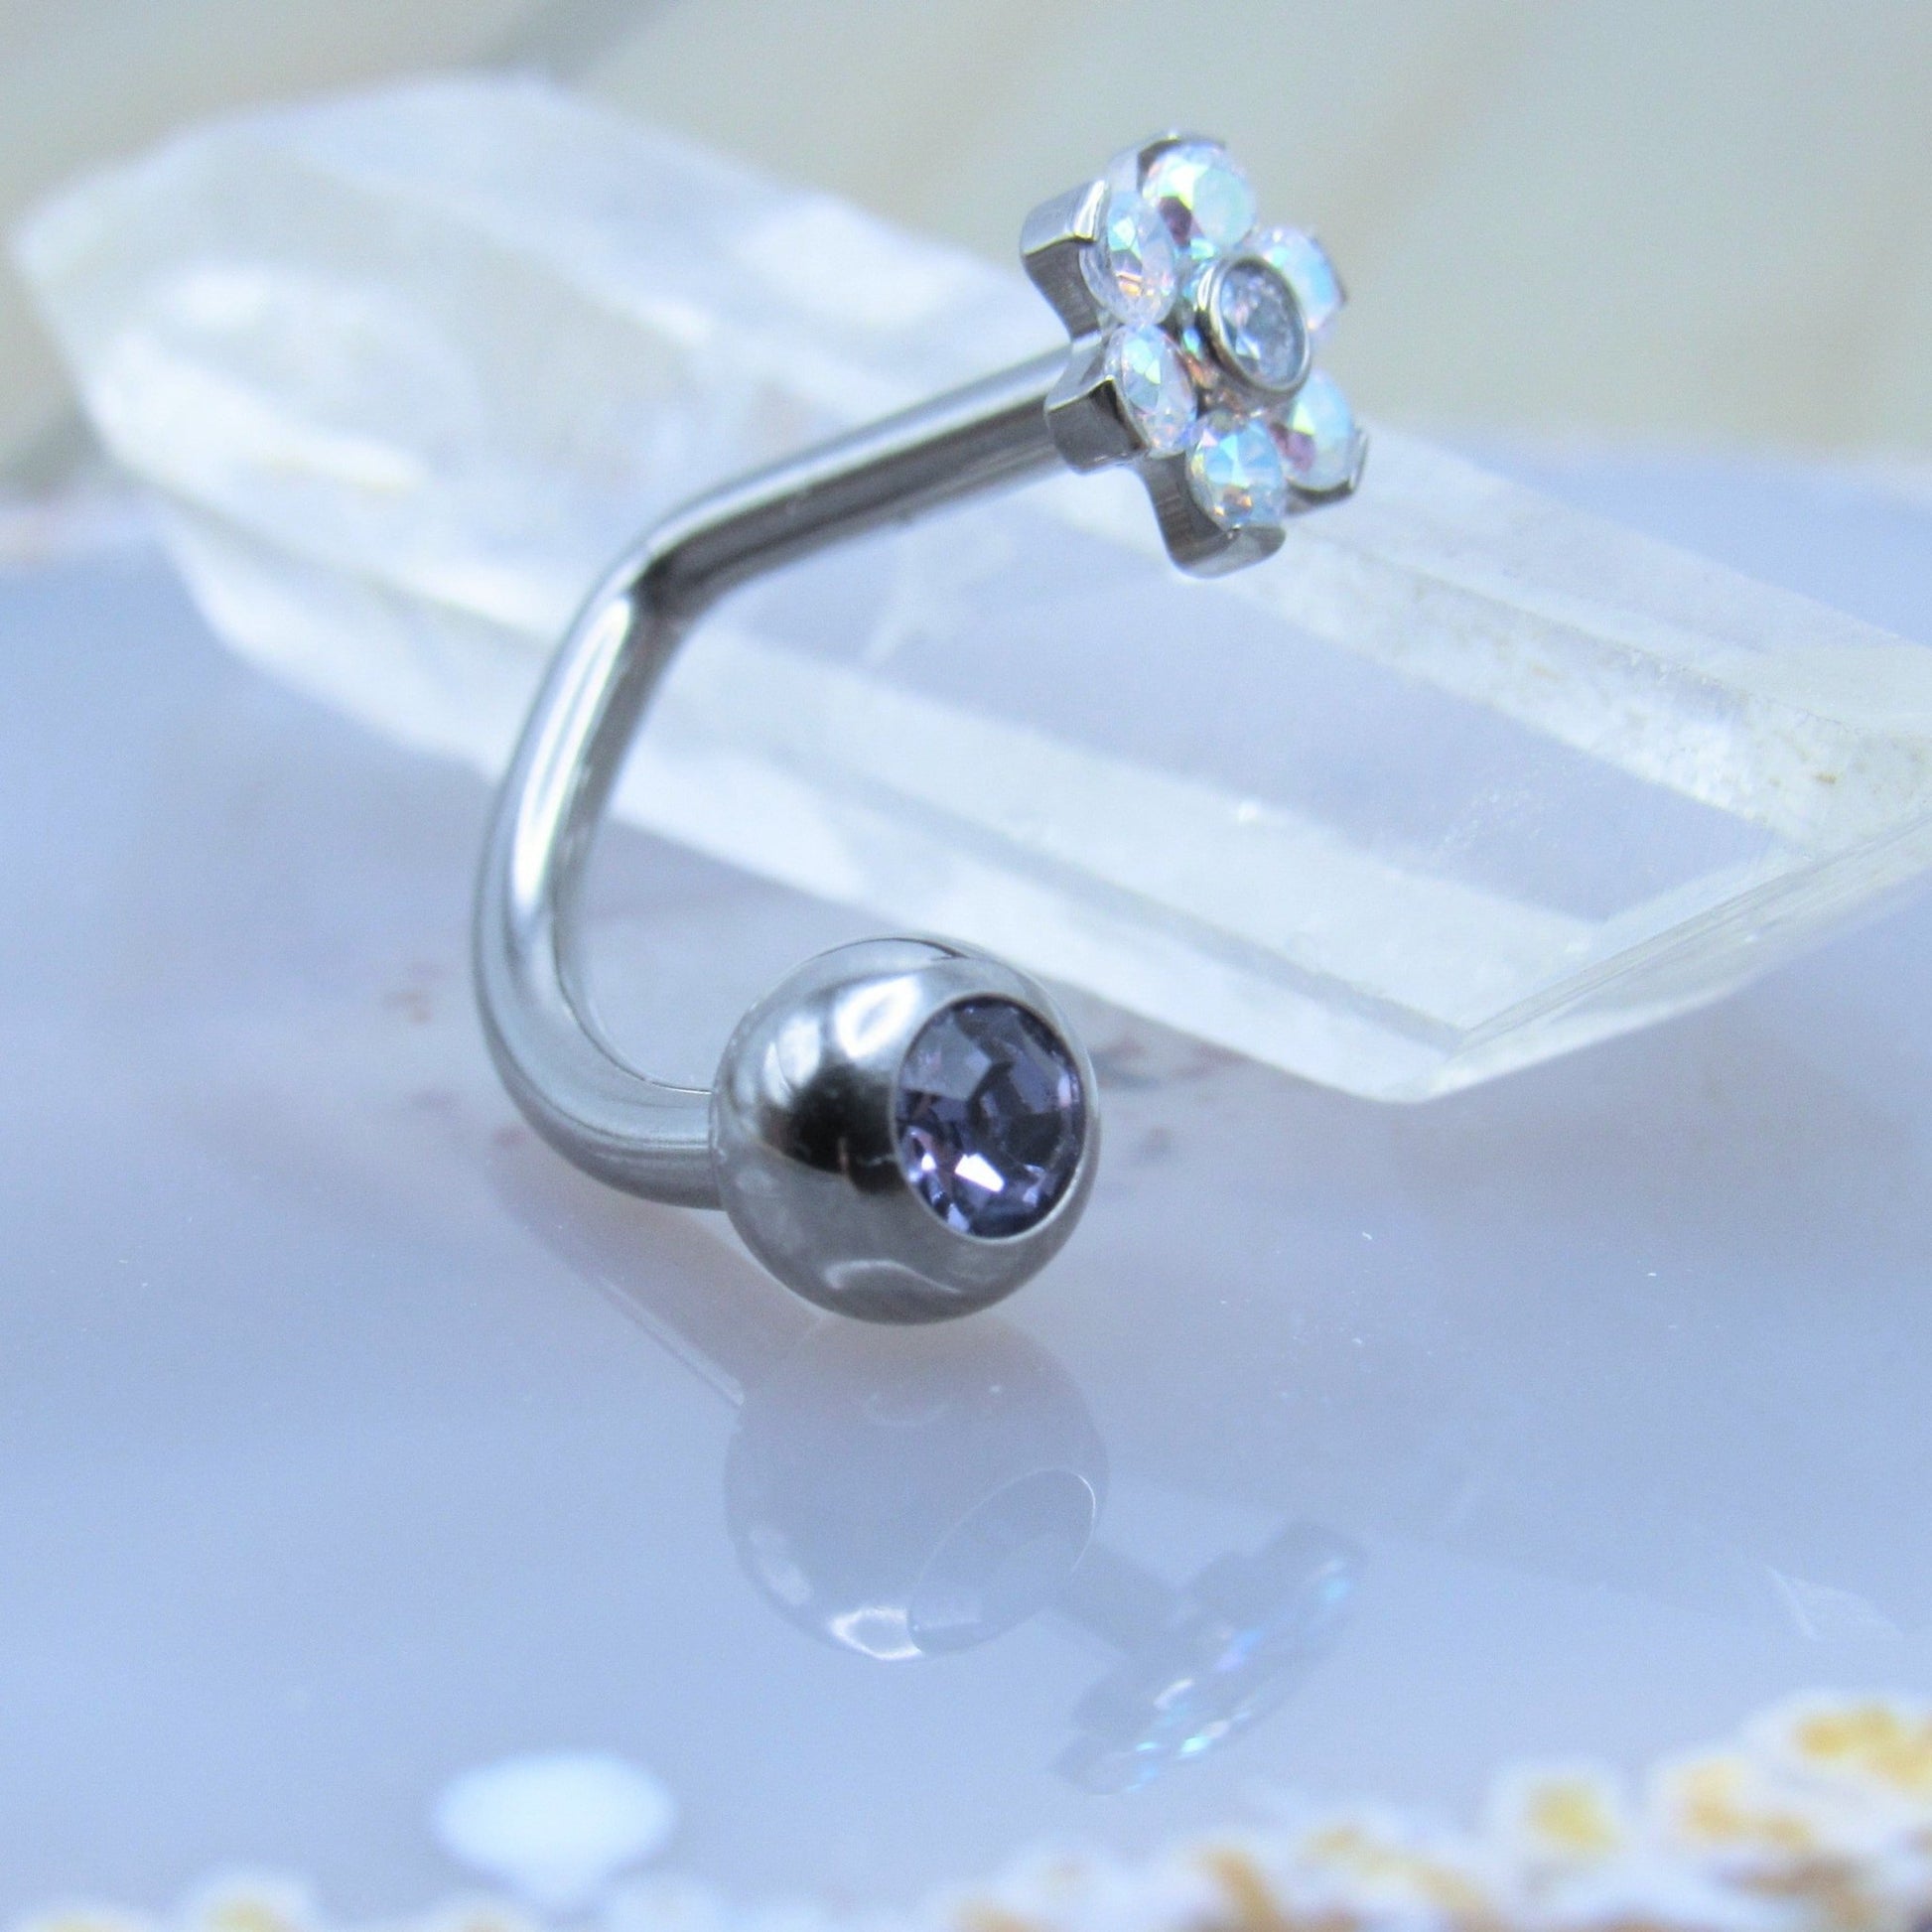 Flower gemstone belly button piercing ring 14g J curved floating navel style barbell titanium purple gemstone ball - Siren Body Jewelry